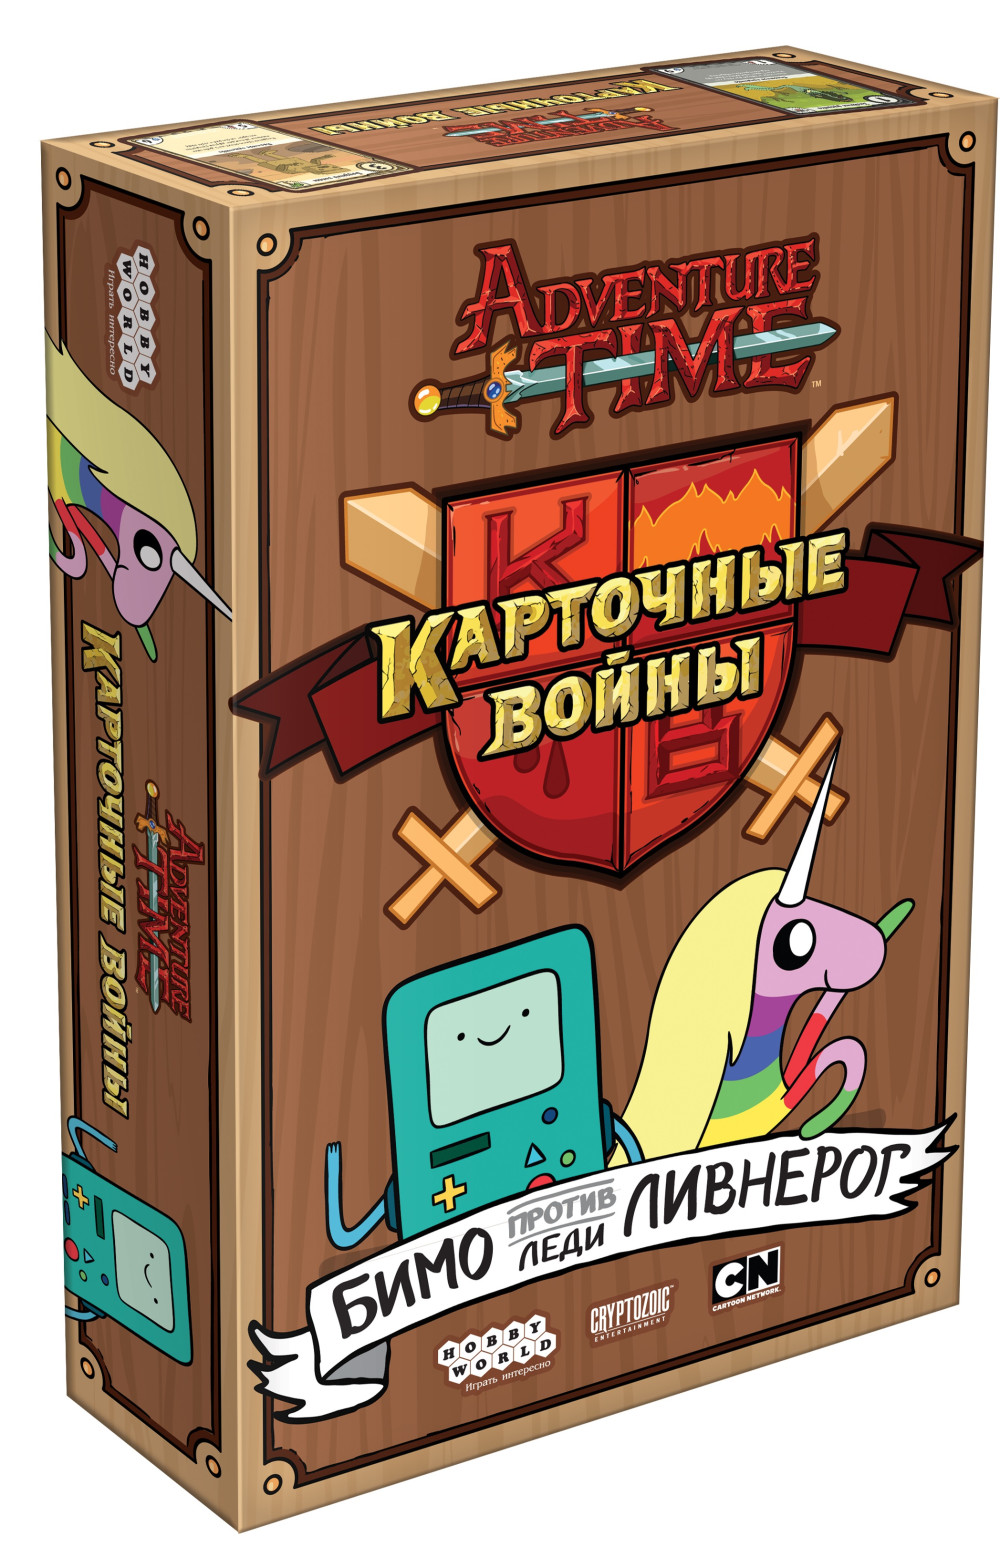   Adventure Time       . 1659 +   12   60 